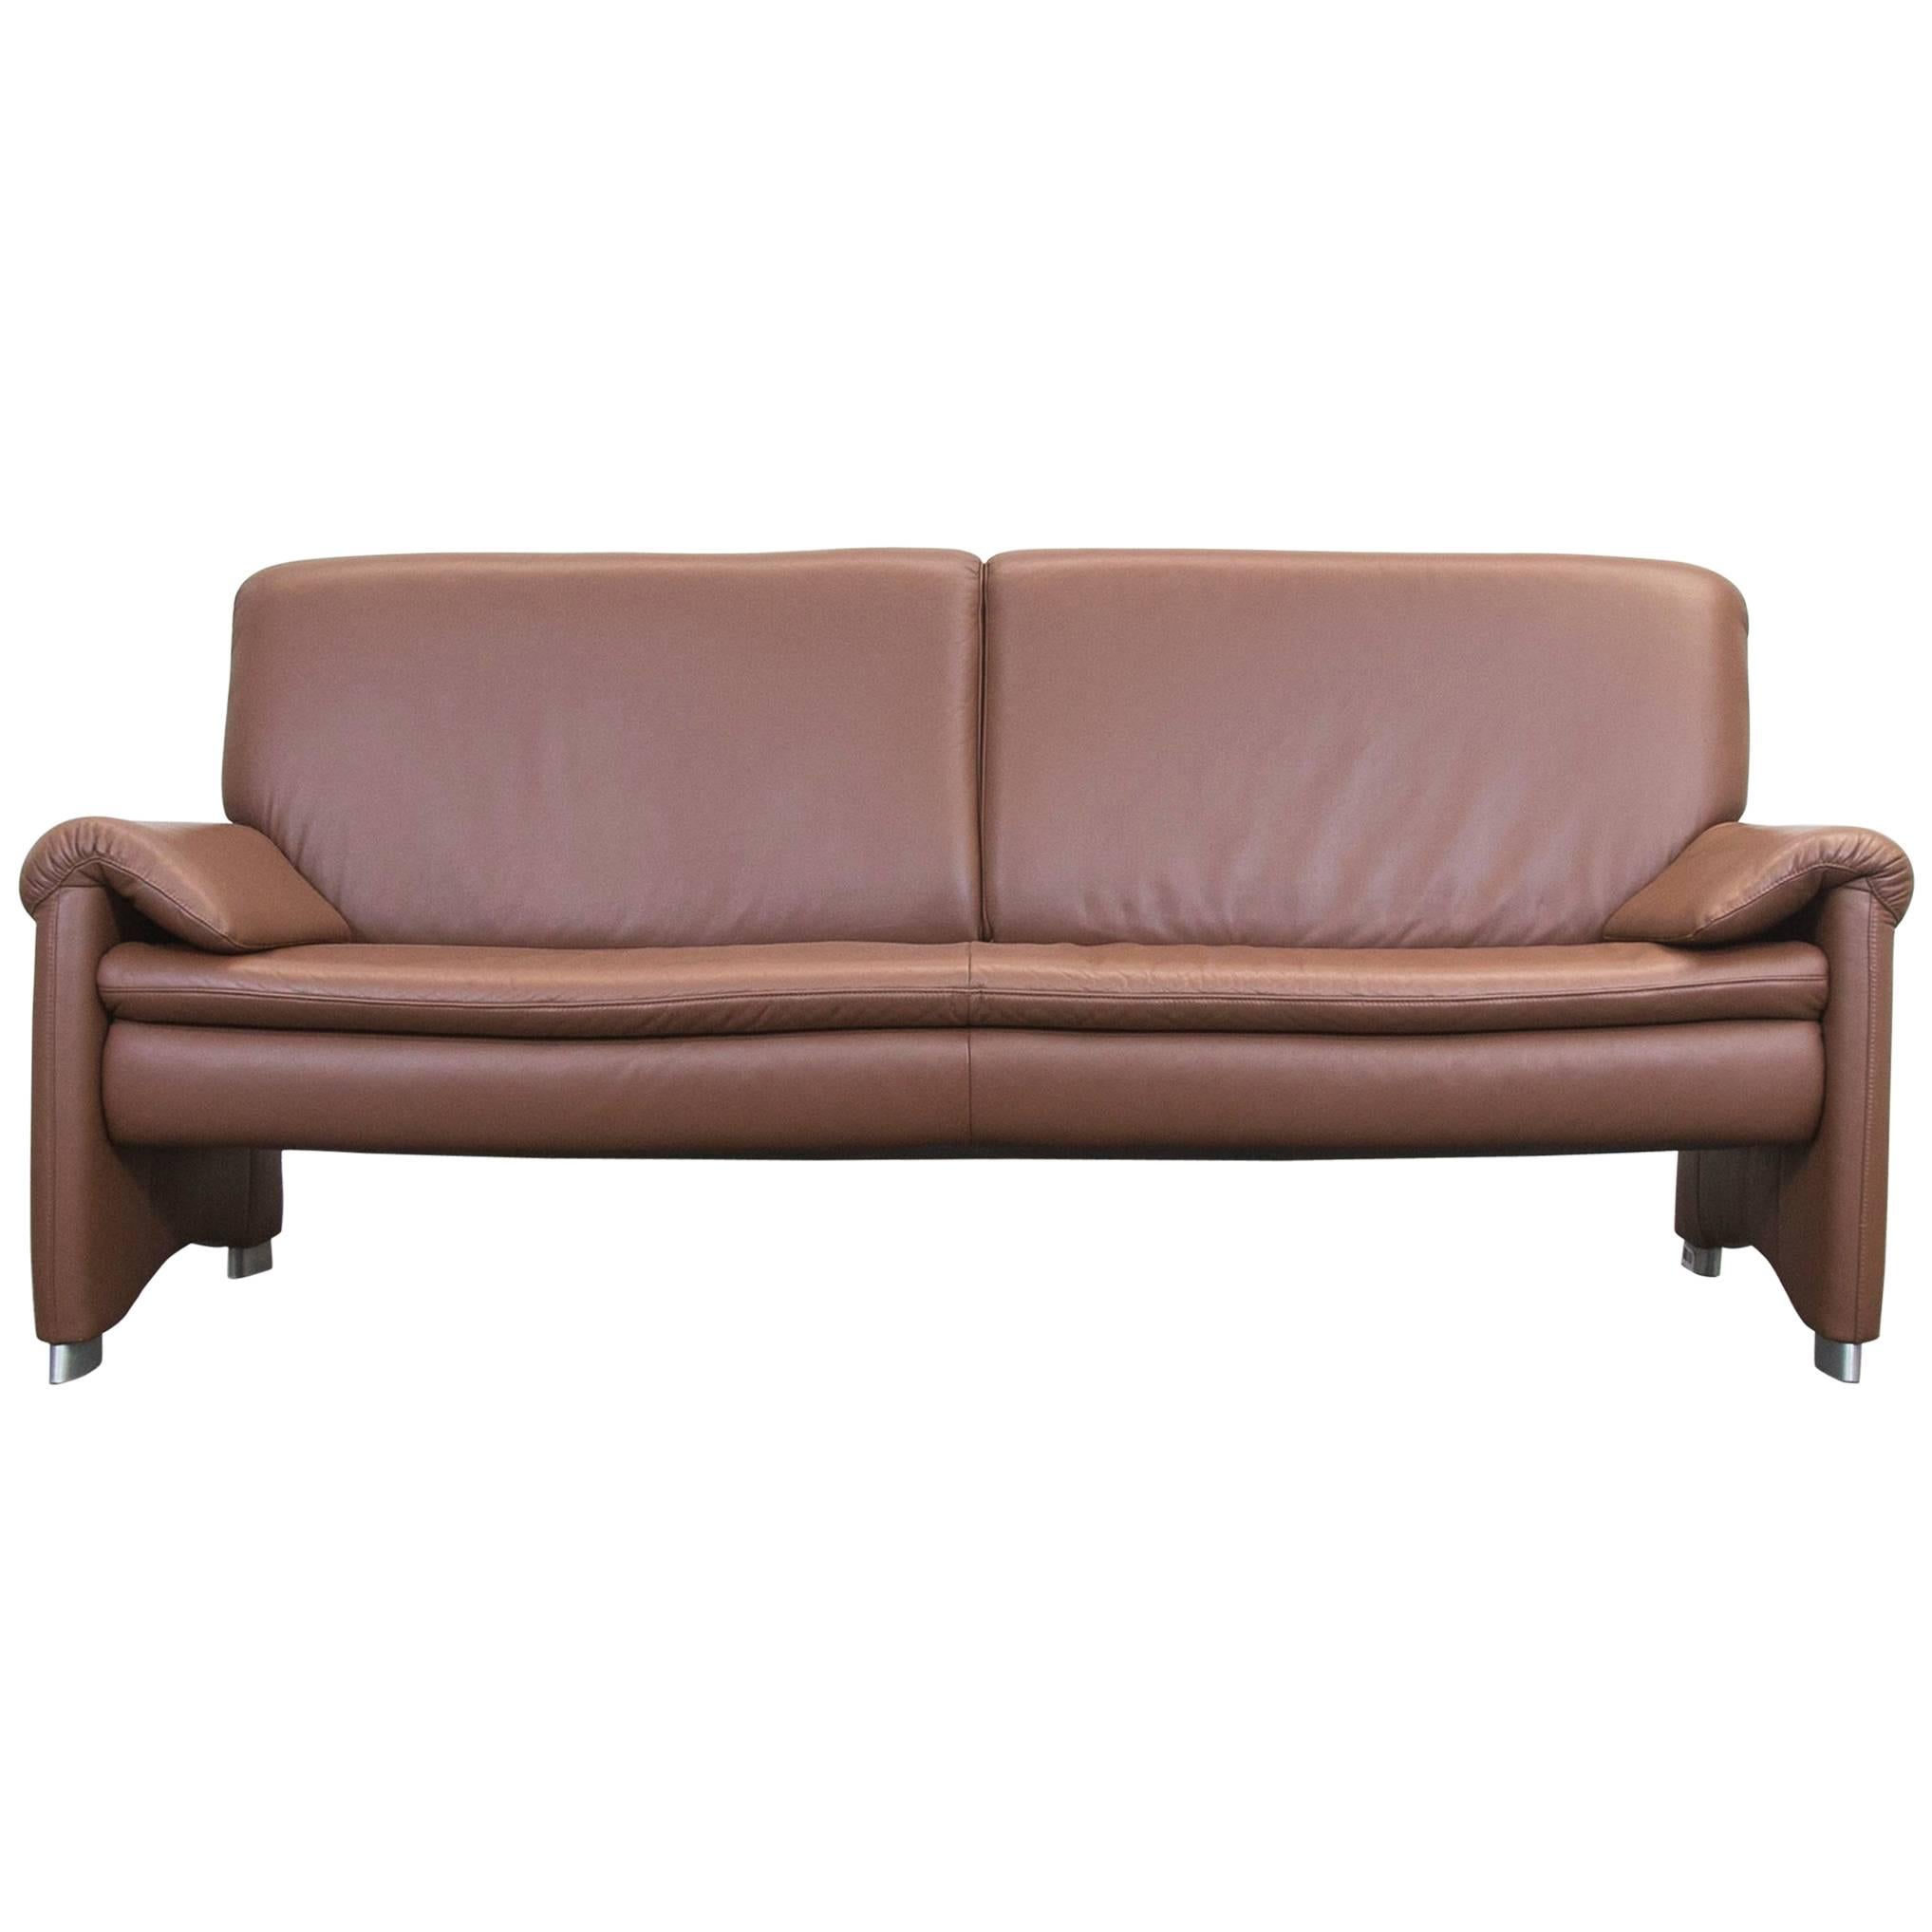 Hülsta Designer Sofa Brown Leather Three-Seat Couch Modern